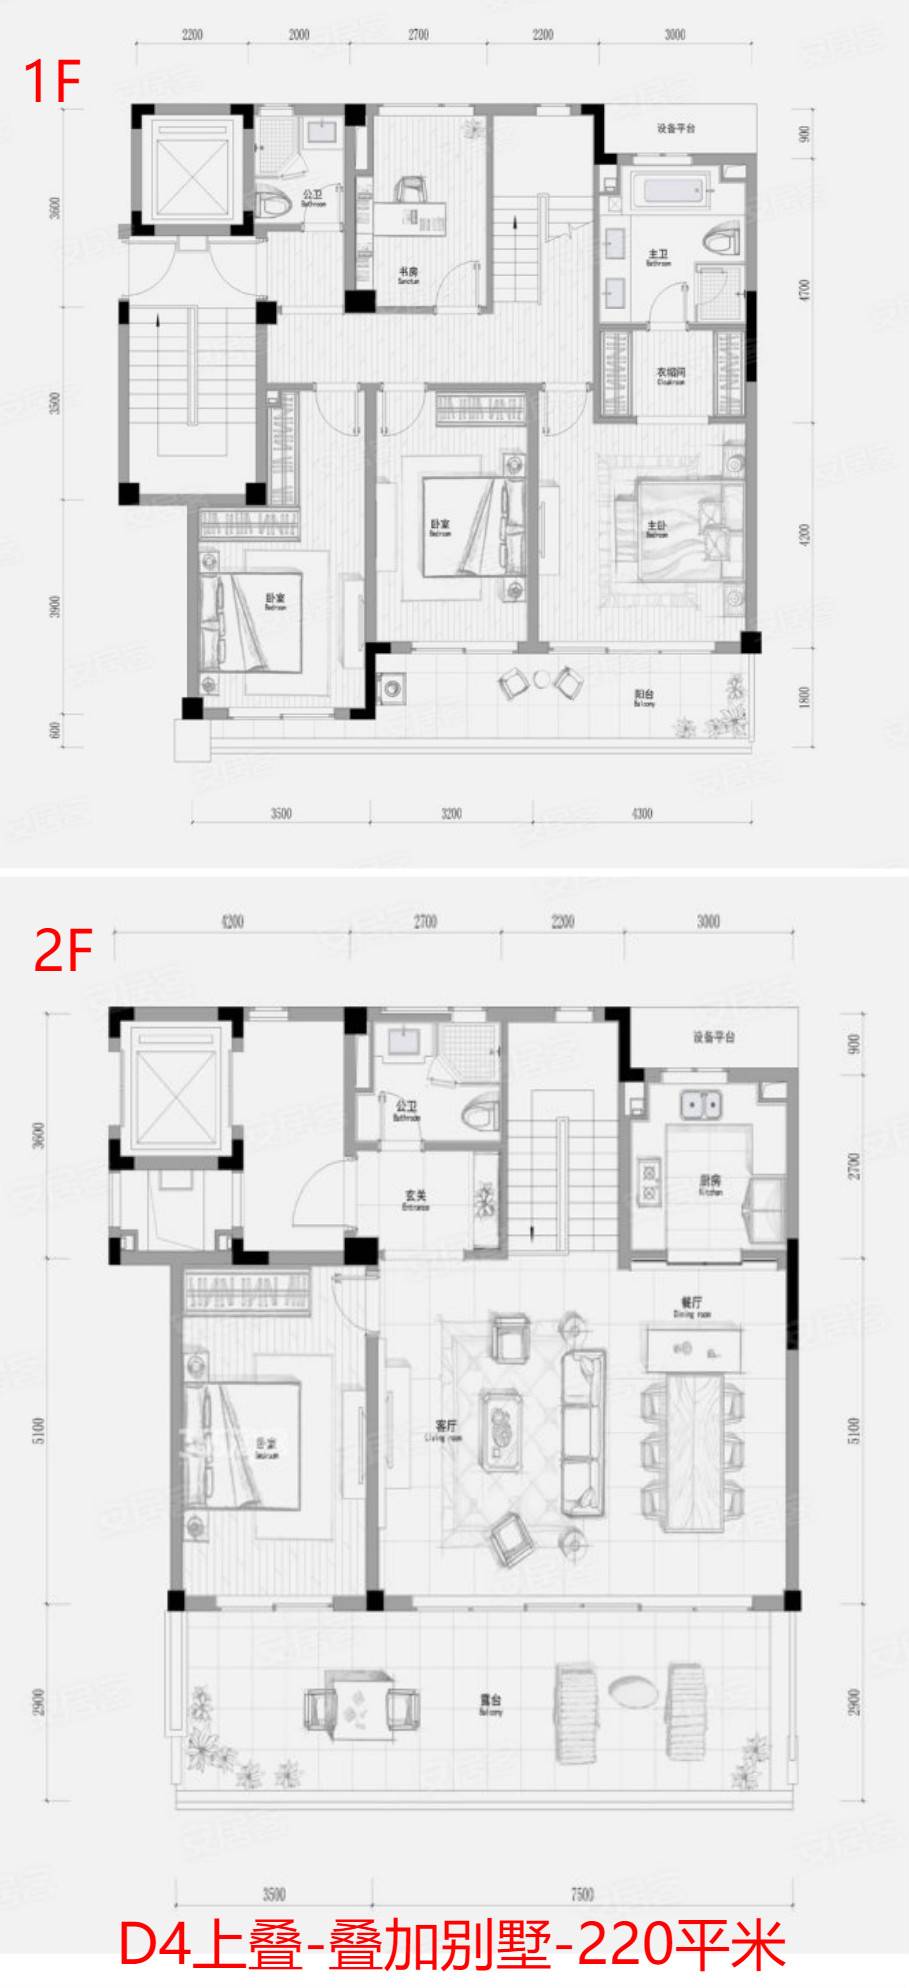 D4上叠-叠加别墅-220平米